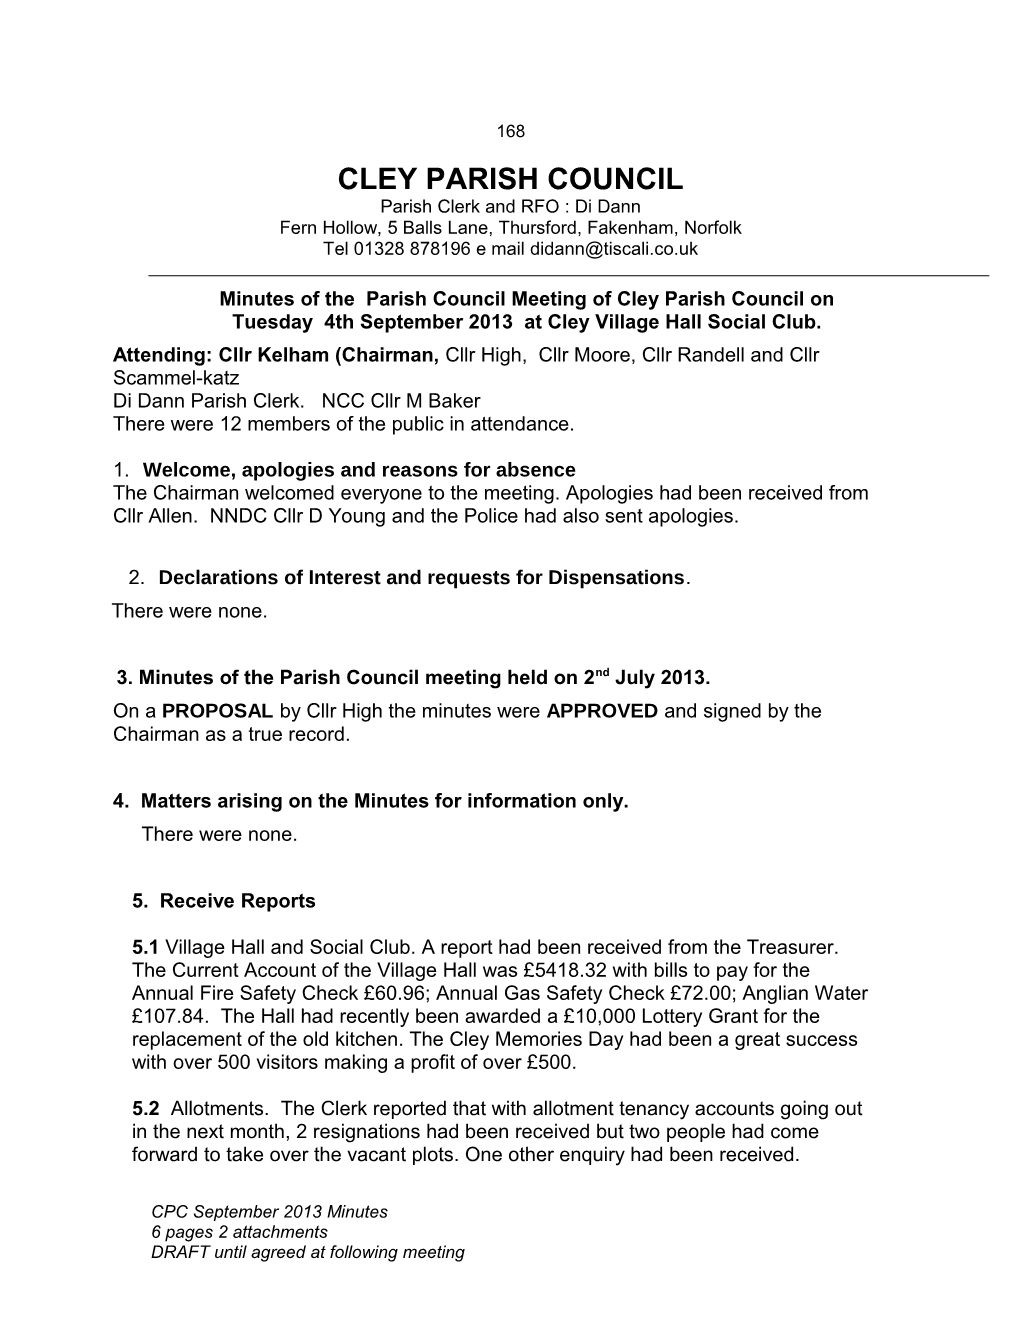 Cley Parish Council s1